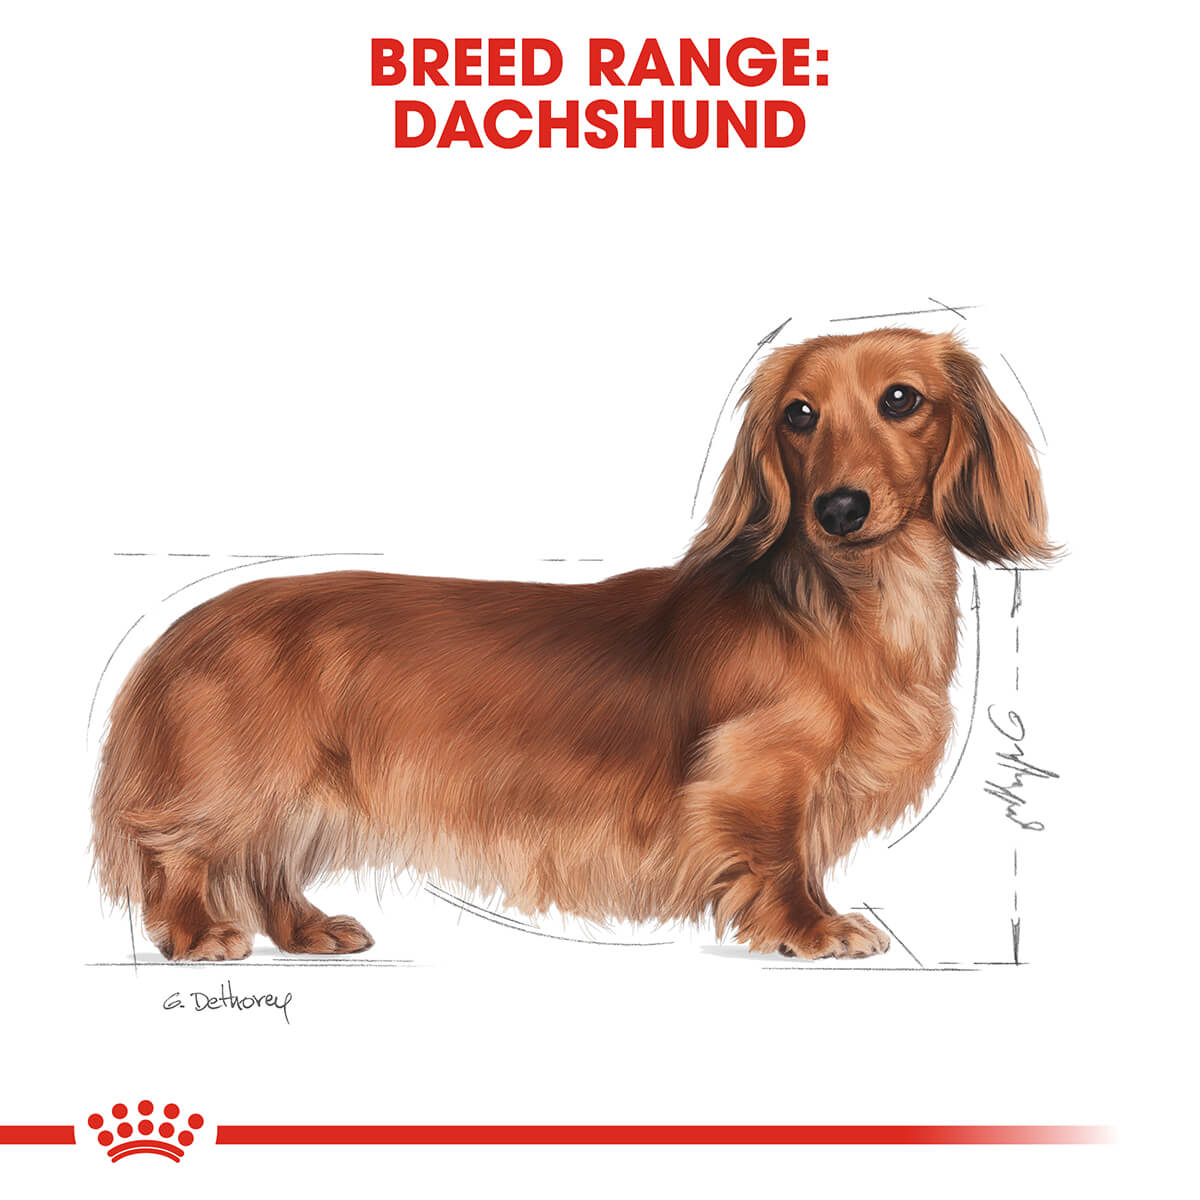 Royal Canin Dachshund Adult Dry Dog Food (122725000055) [default_color]